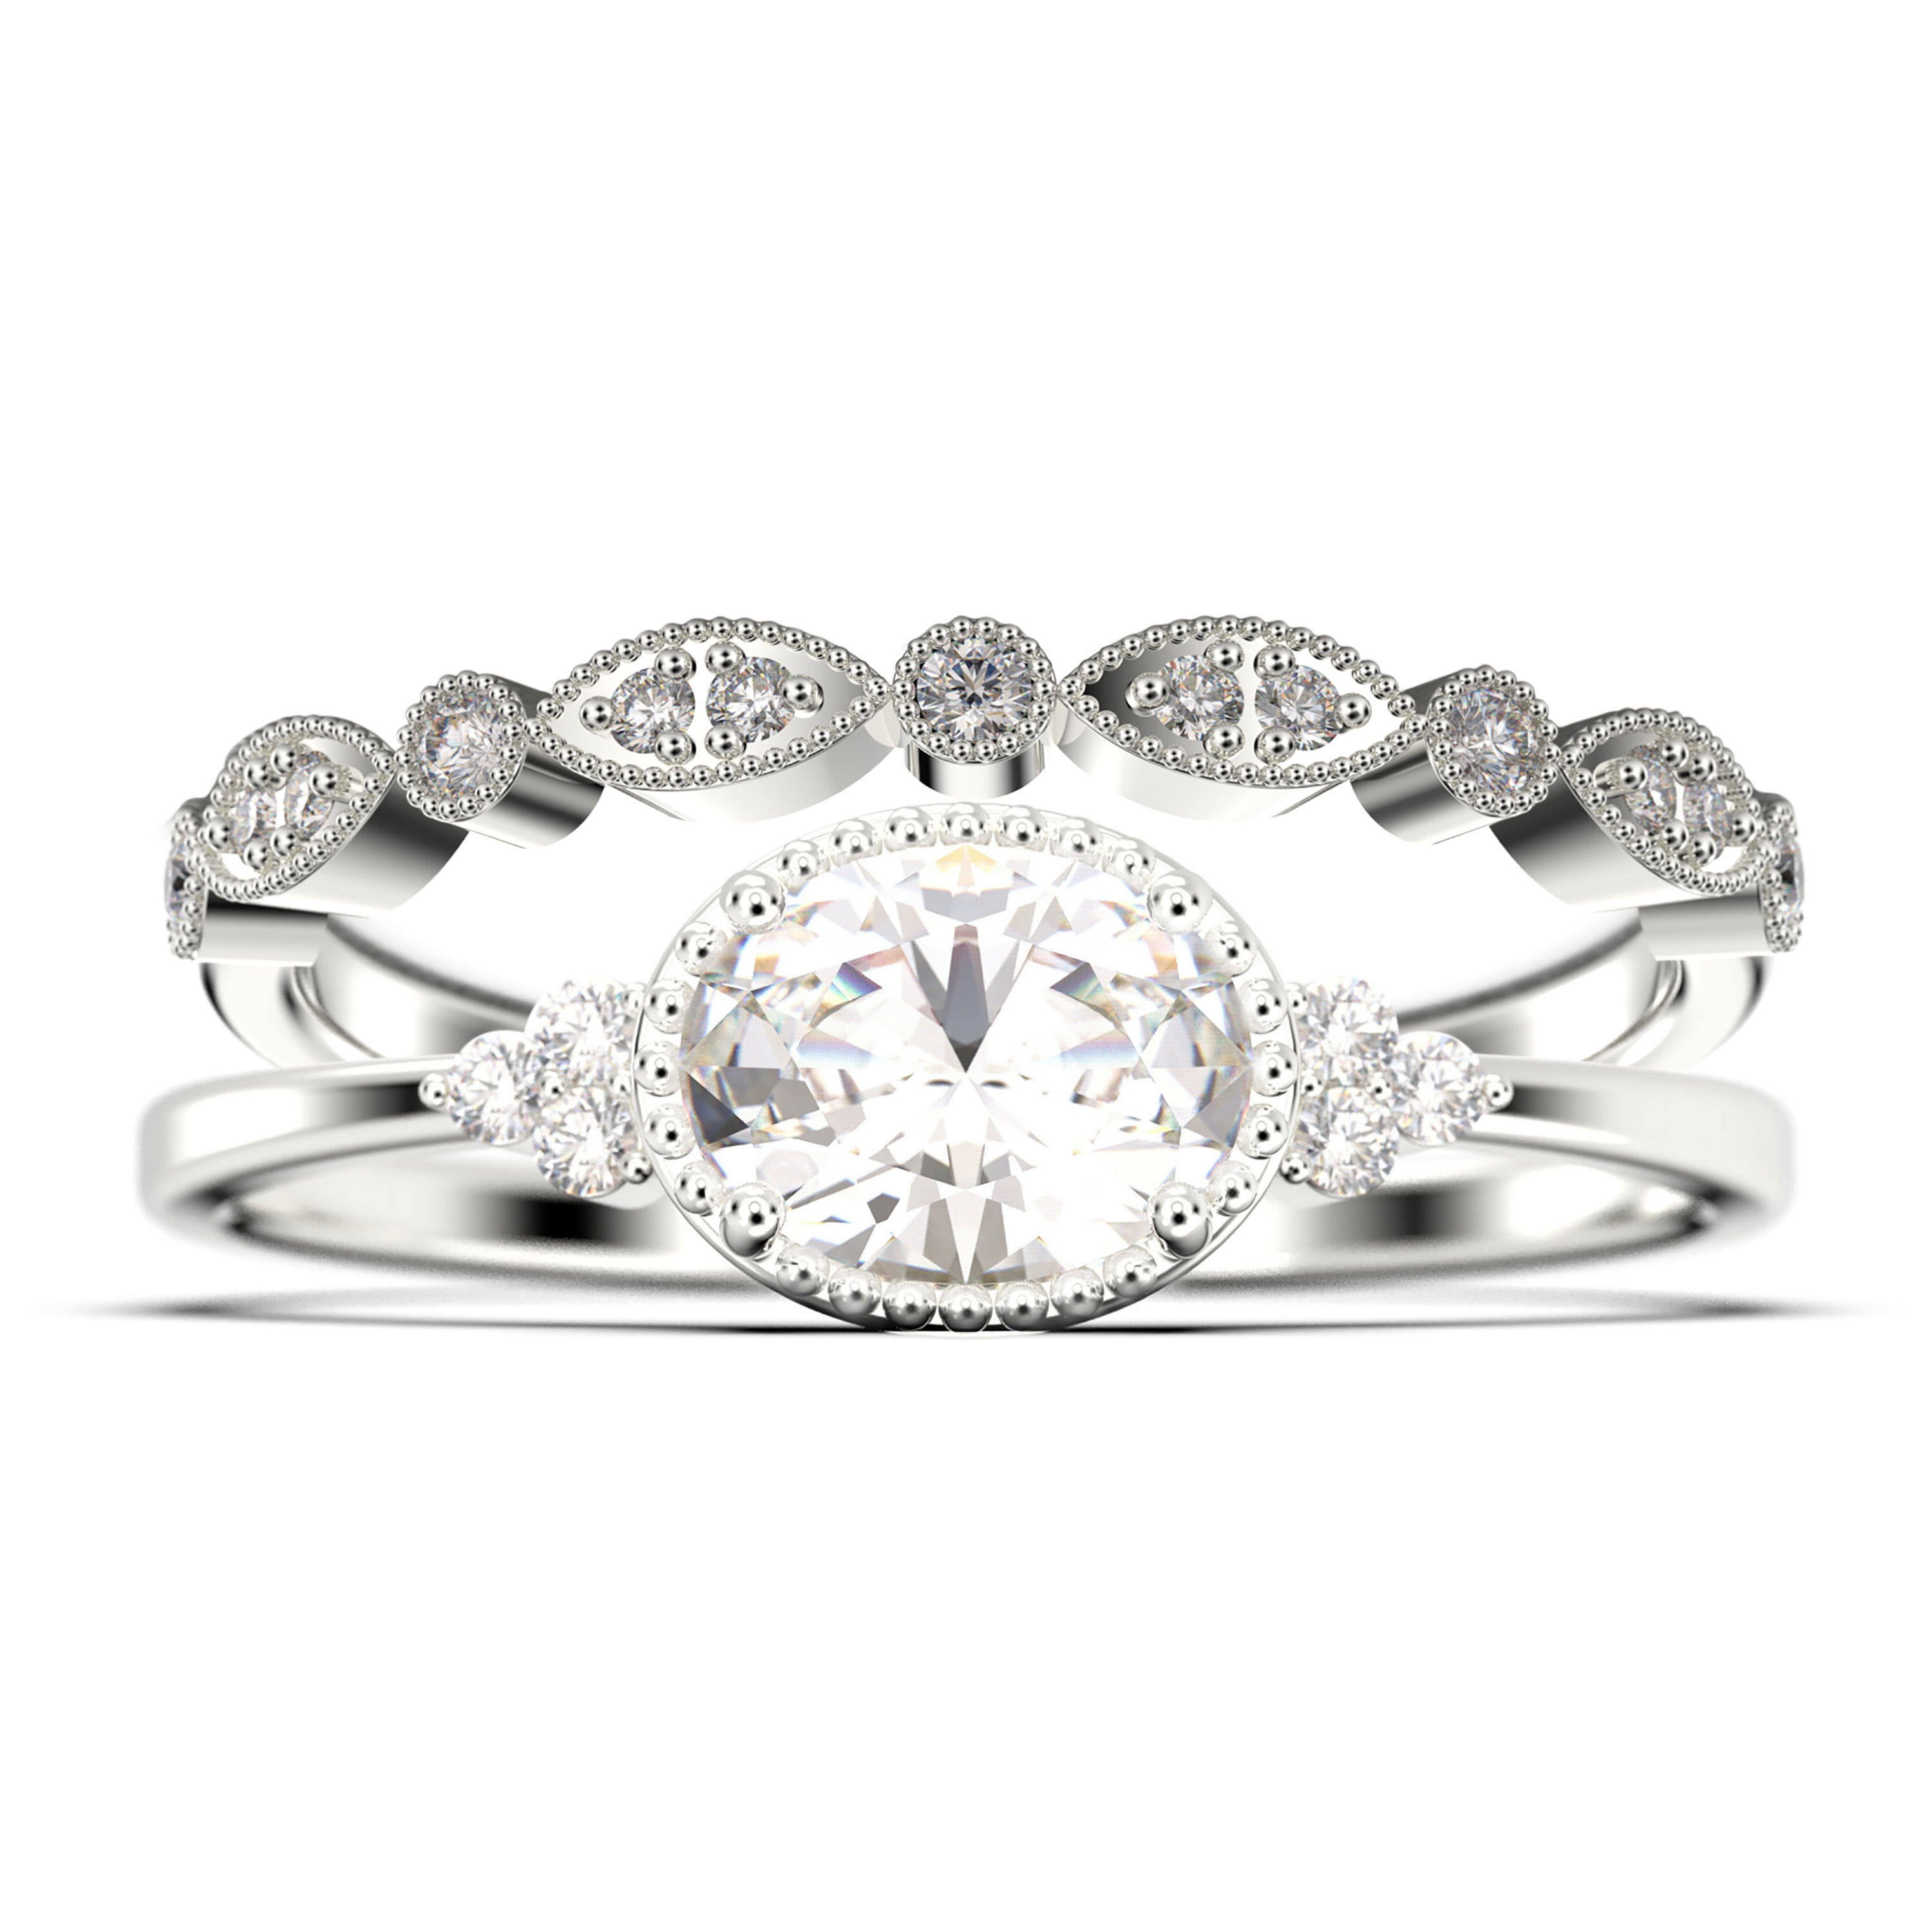 Details about   2.75 Ct Round White Diamond Engagement Wedding Valentine & Gift Ring 925 Silver 